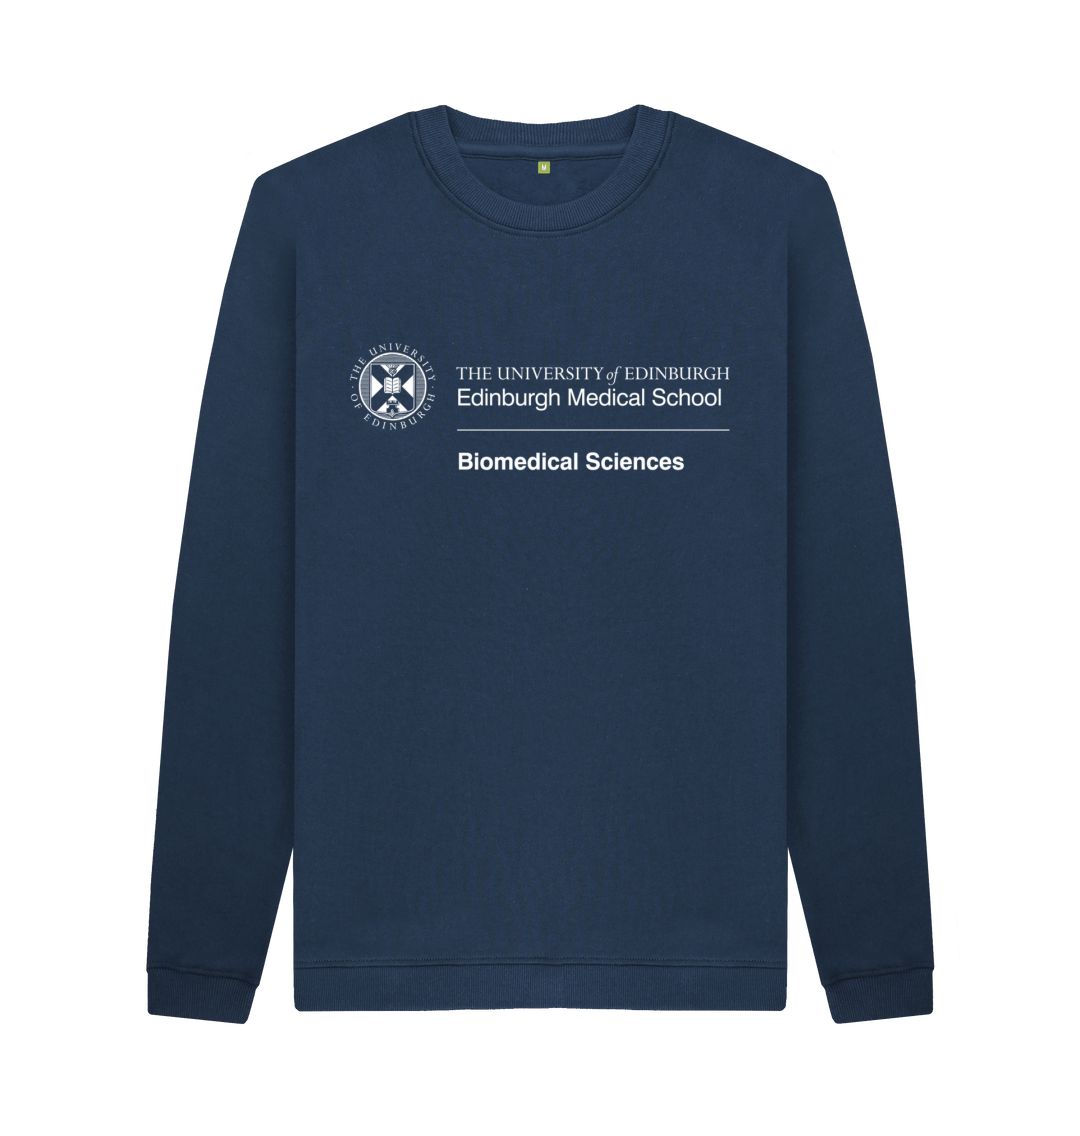 Navy Sweatshirt with white University crest and text that reads ' University of Edinburgh : Edinburgh Medical School - Biomedical Sciences '